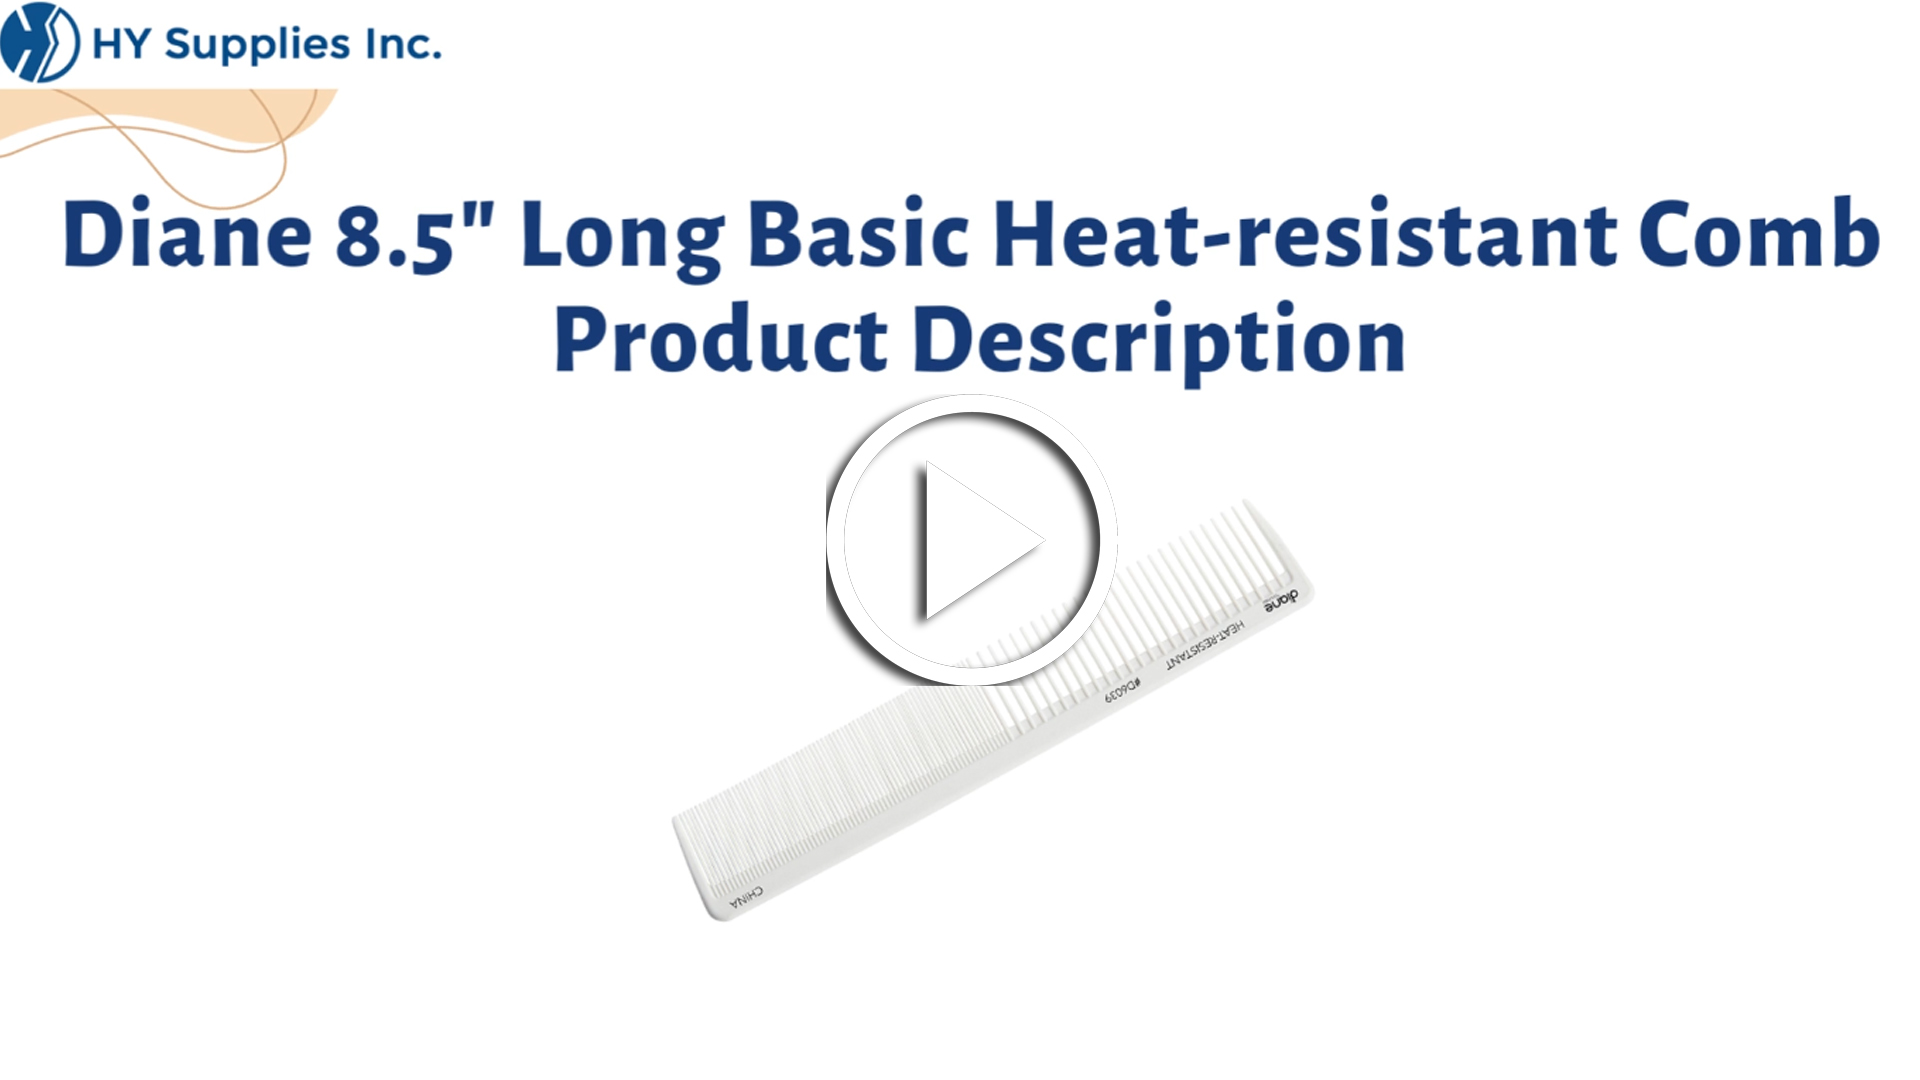 Diane 8.5"" Long Basic Heat-resistant Comb 